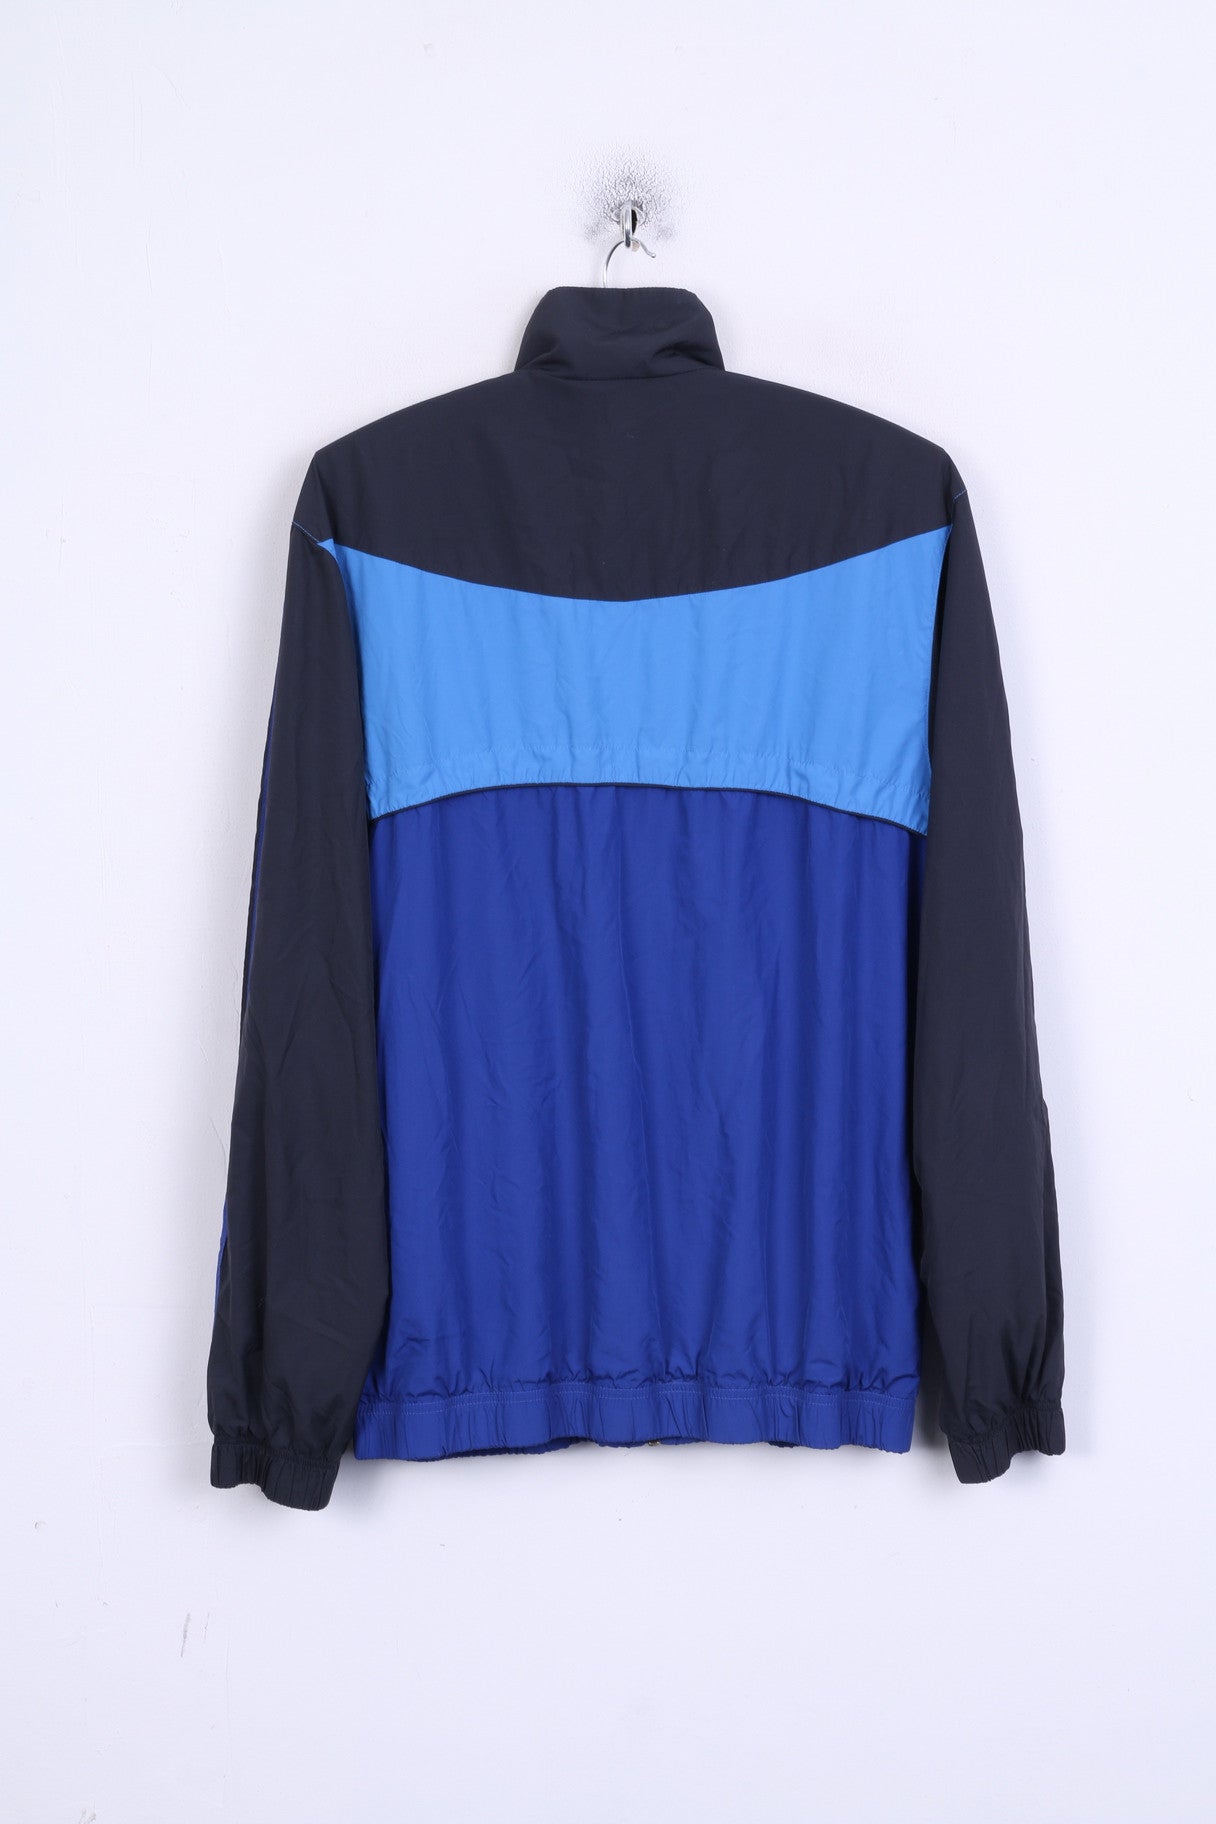 Adidas Mens M Jacket Track Top Blue Training Sportswear Two Pockets